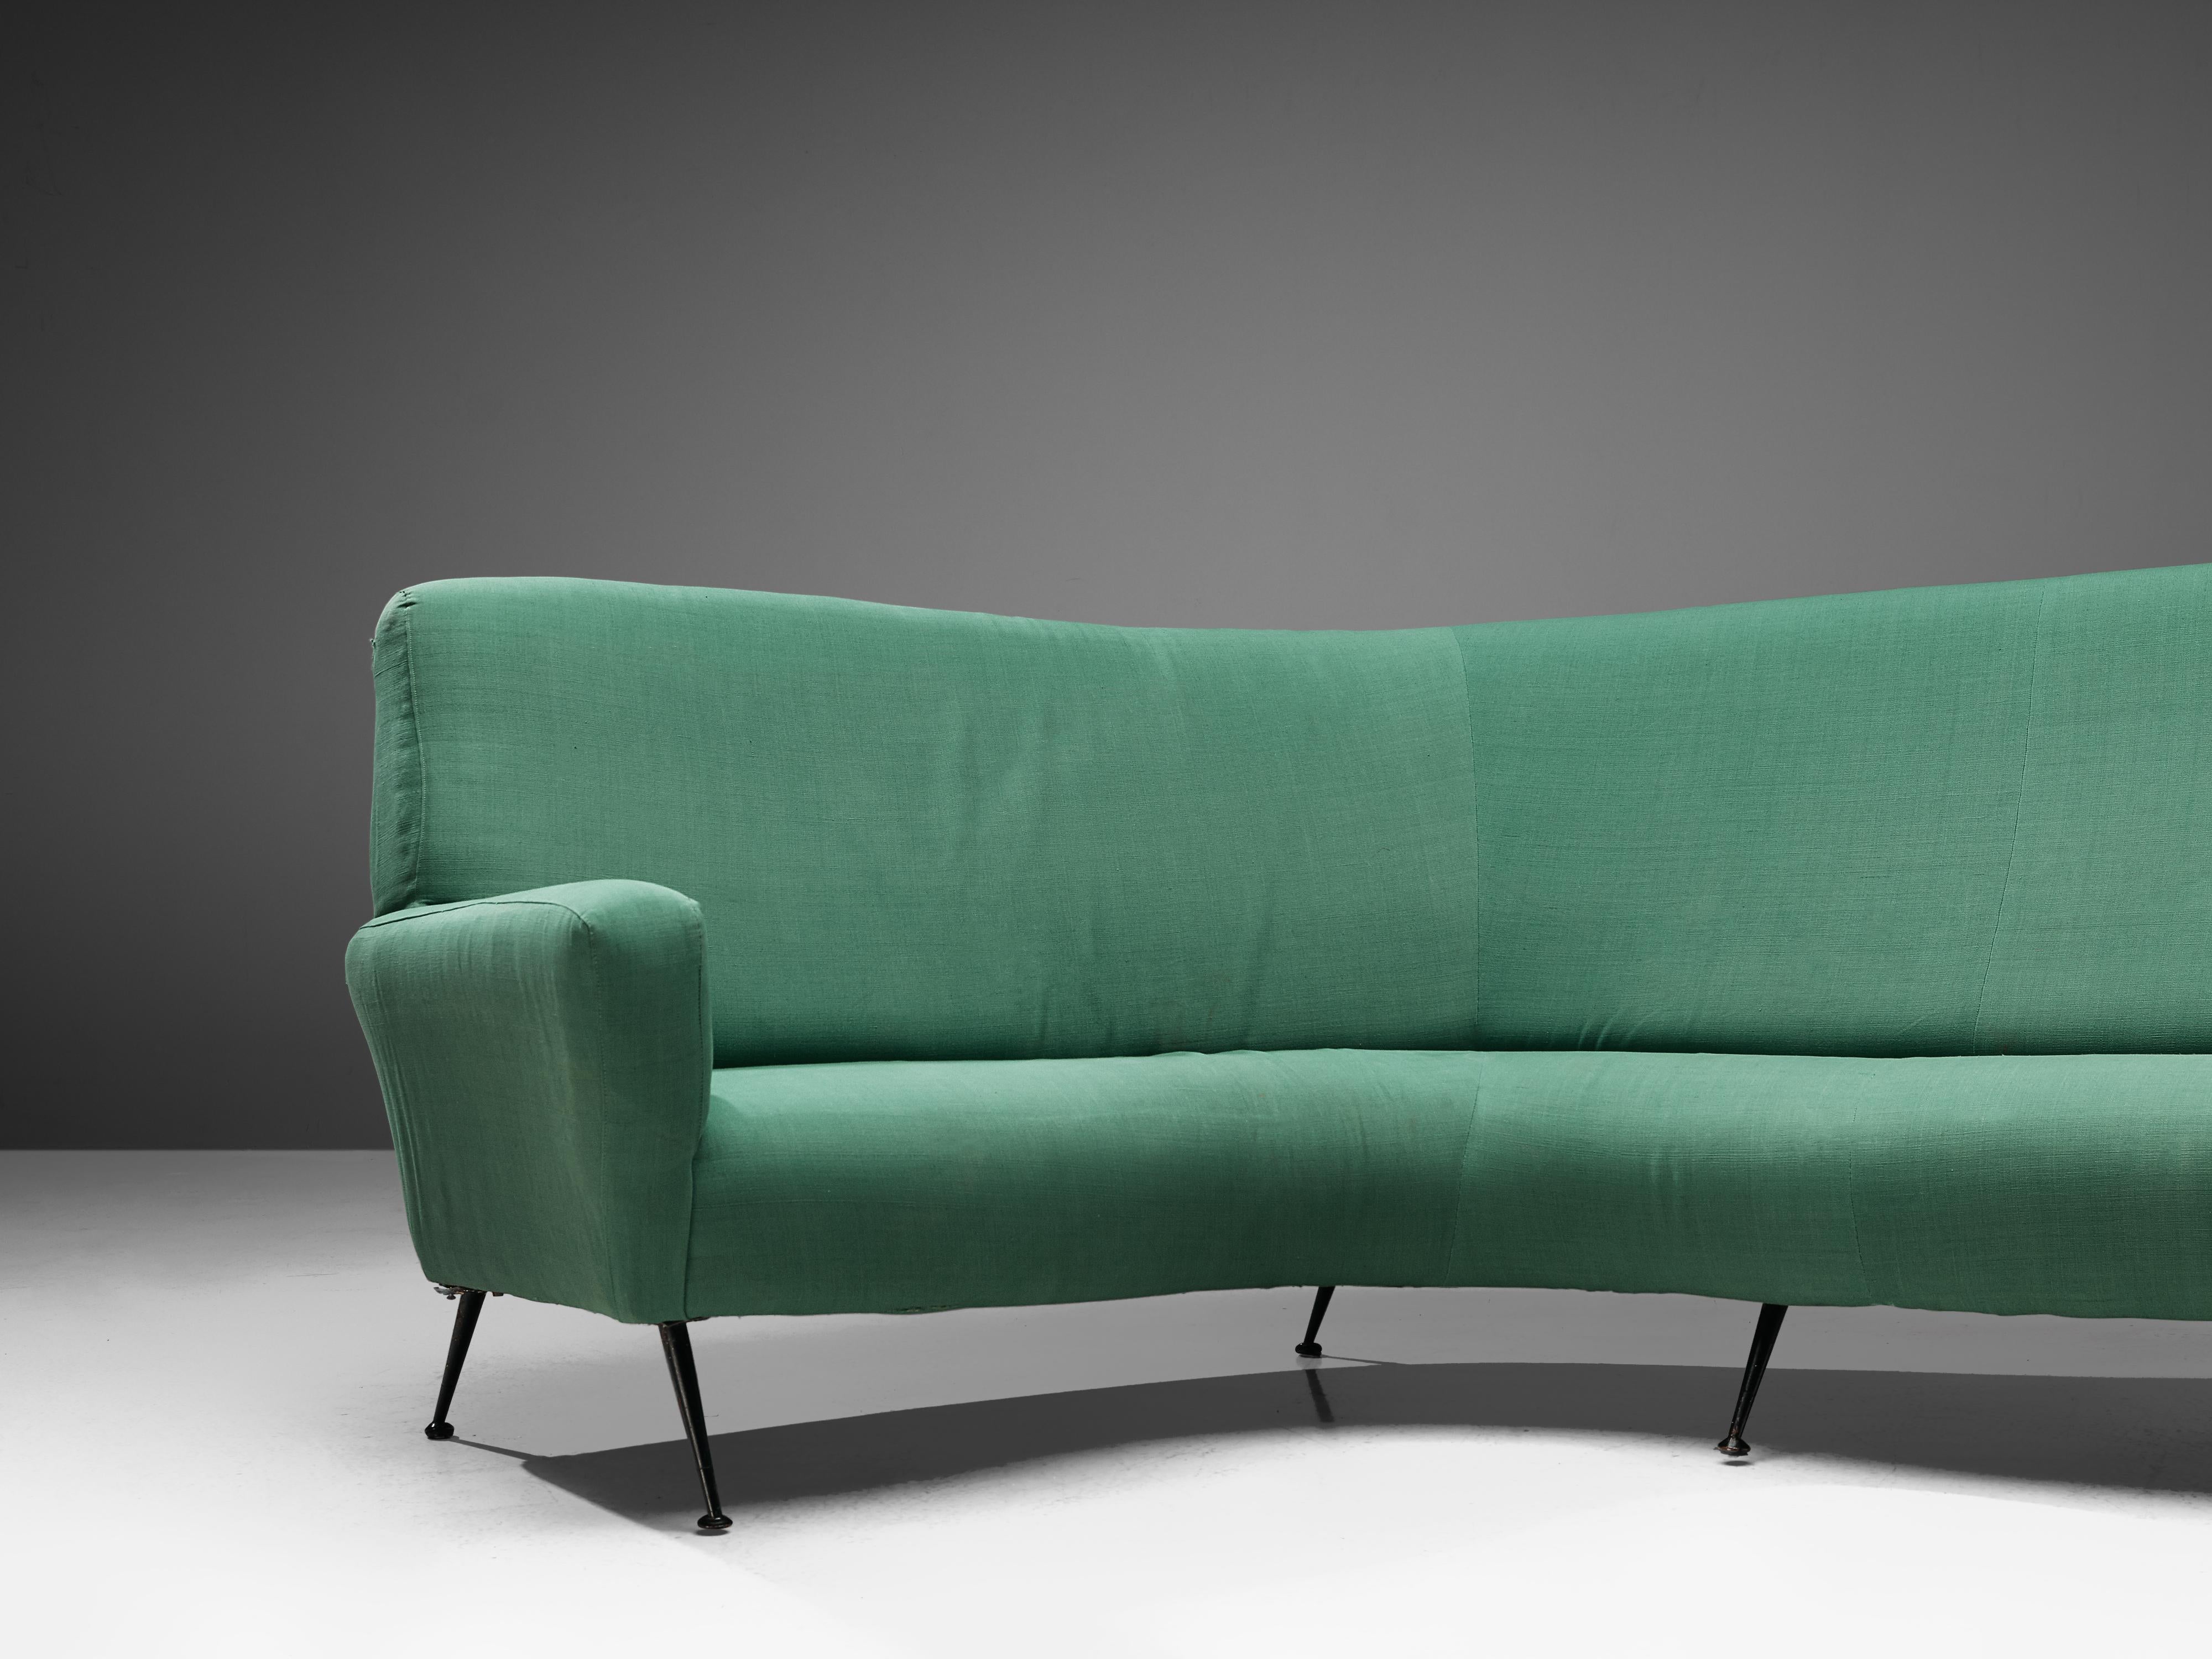 20th Century Gigi Radice for Minotti Curved Sofa in Green Upholstery